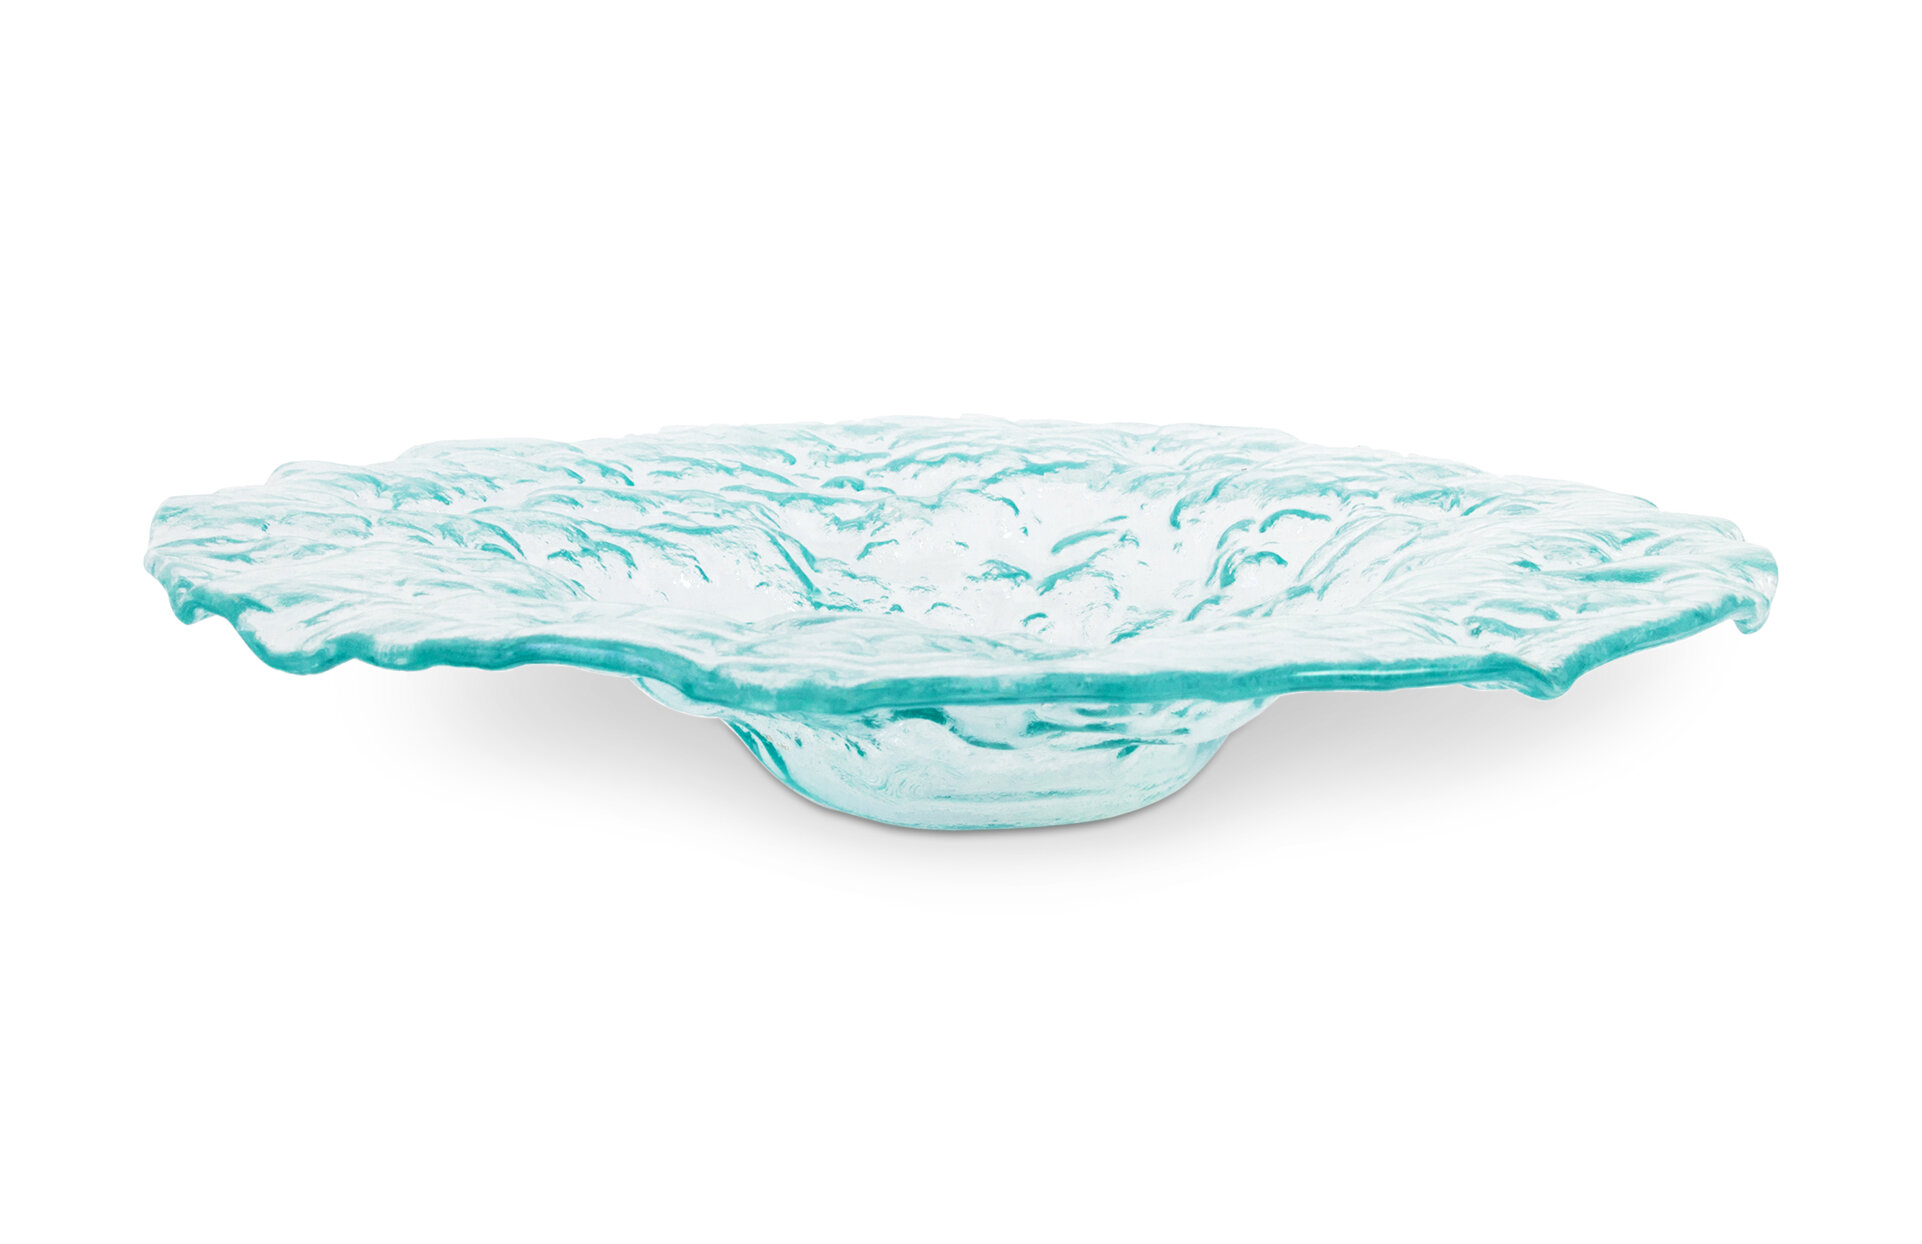 Orren Ellis Helle Glass Decorative Bowl | Wayfair